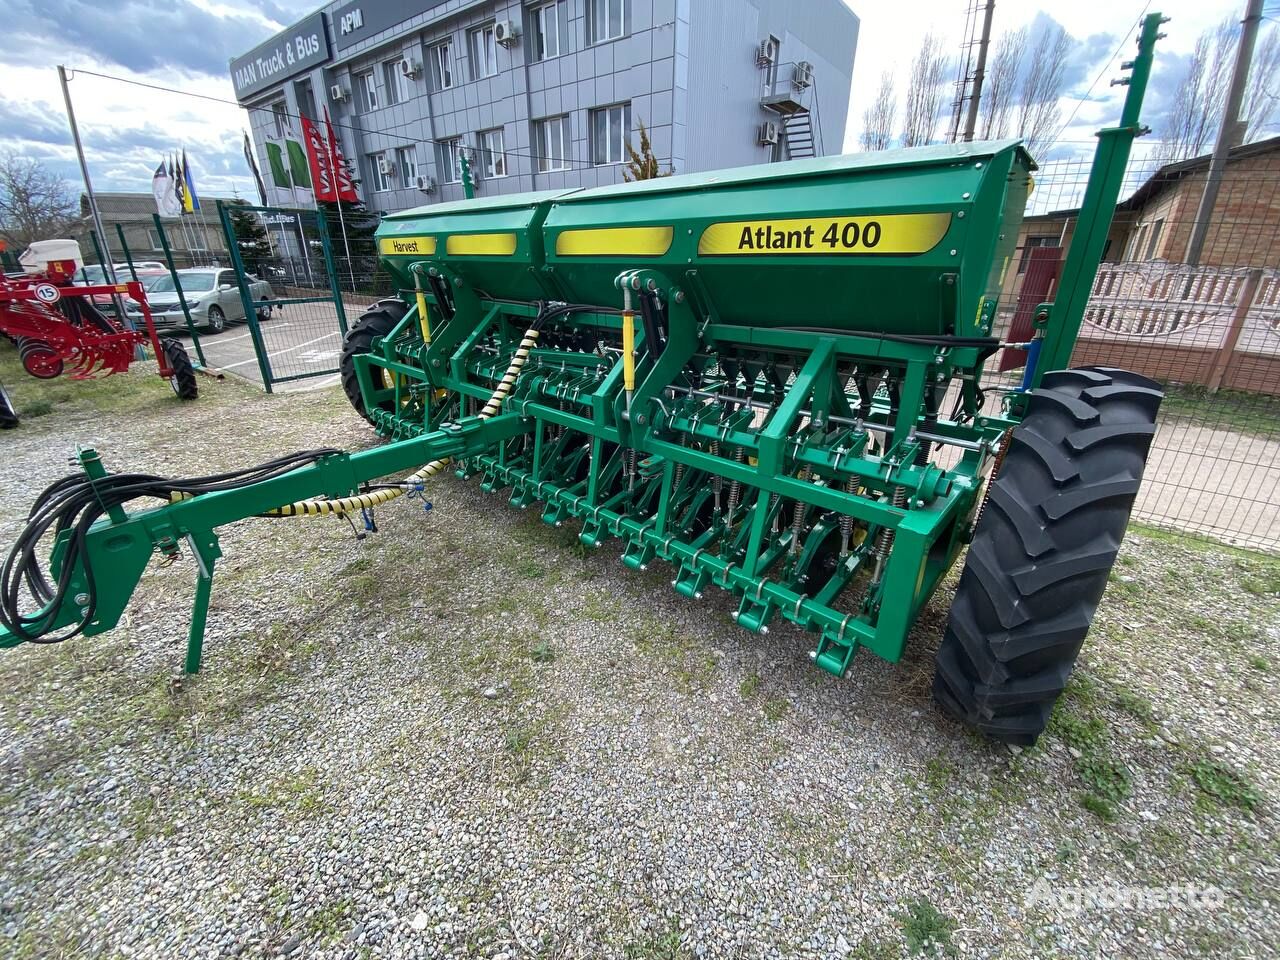 Harvest Atlant 400 sembradora mecánica nueva